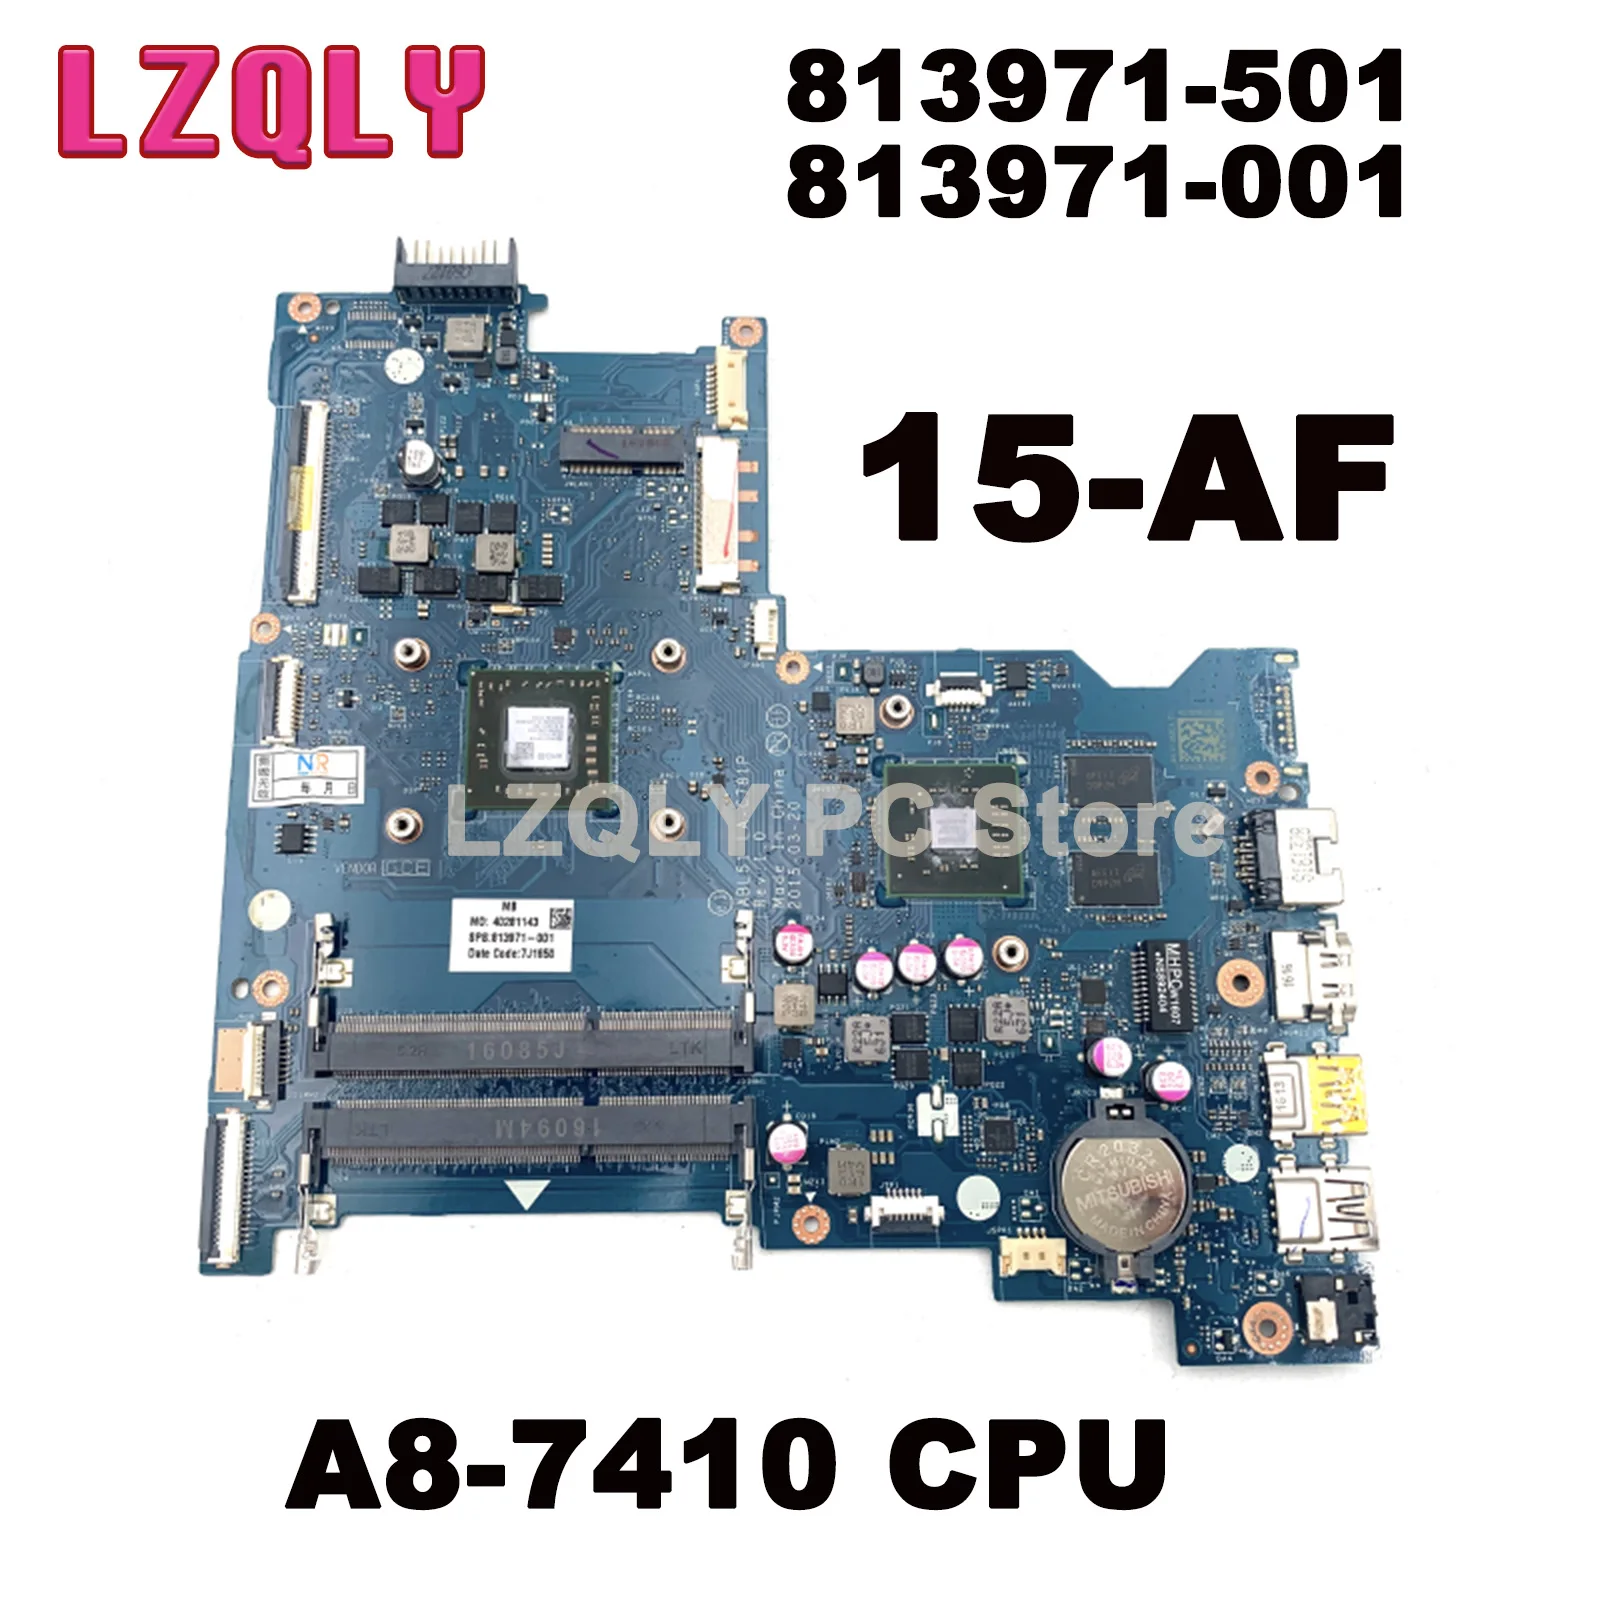 LZQLY 813971-501 813971-001 ABL51 LA-C781P For HP 15-AF Laptop Motherboard A8-7410 CPU DDR3 Main Board Full Test